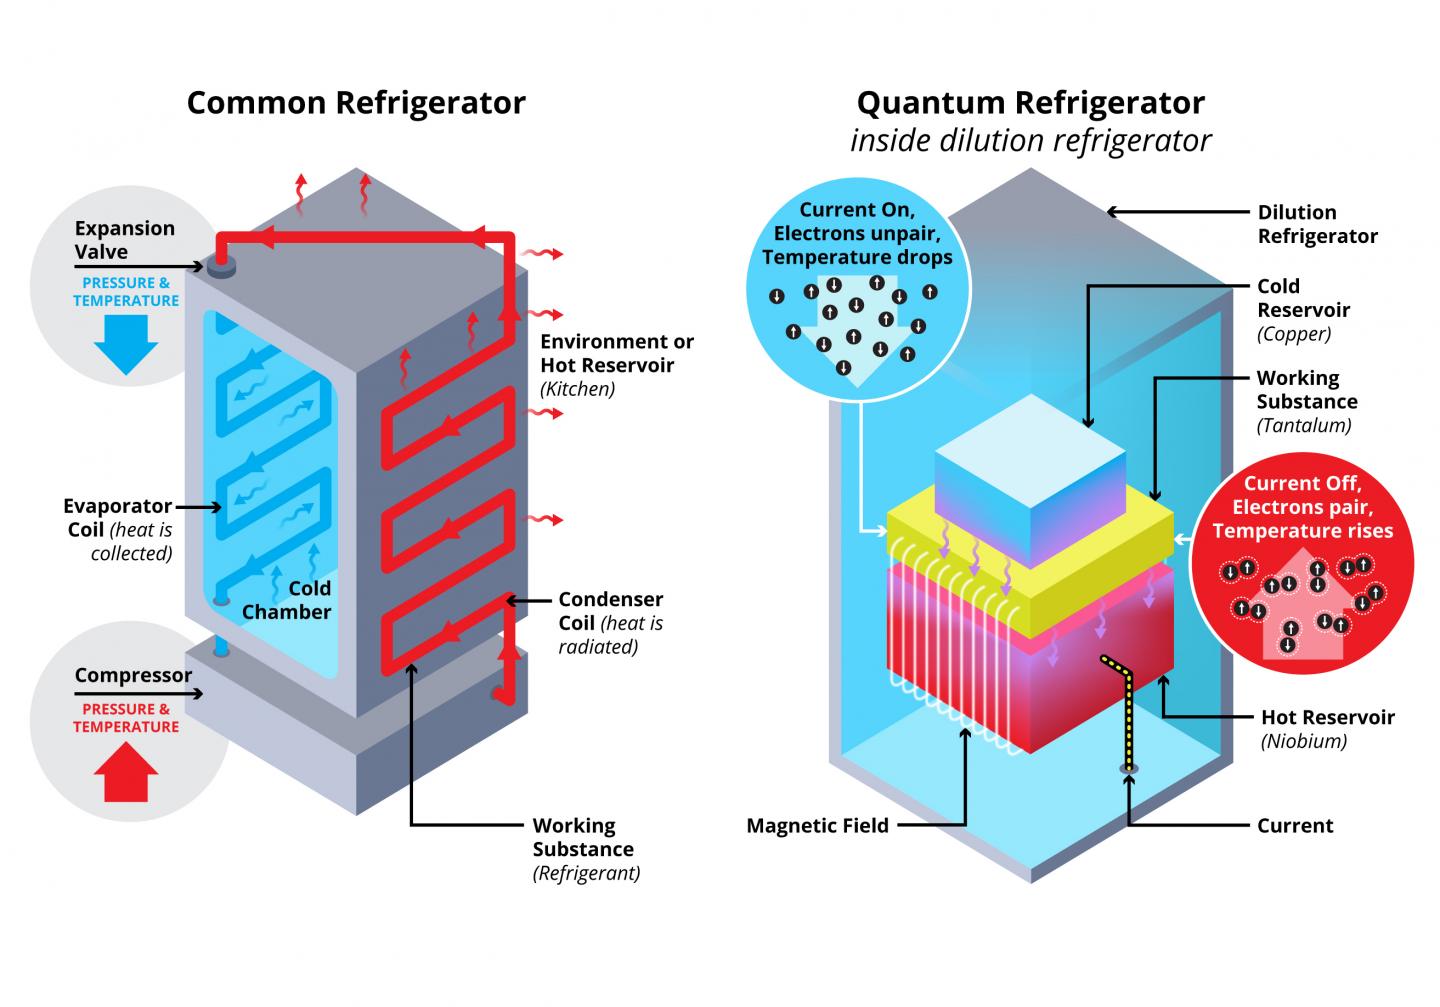 Traditional Refrigerator vs. Superconducting Refrigerator